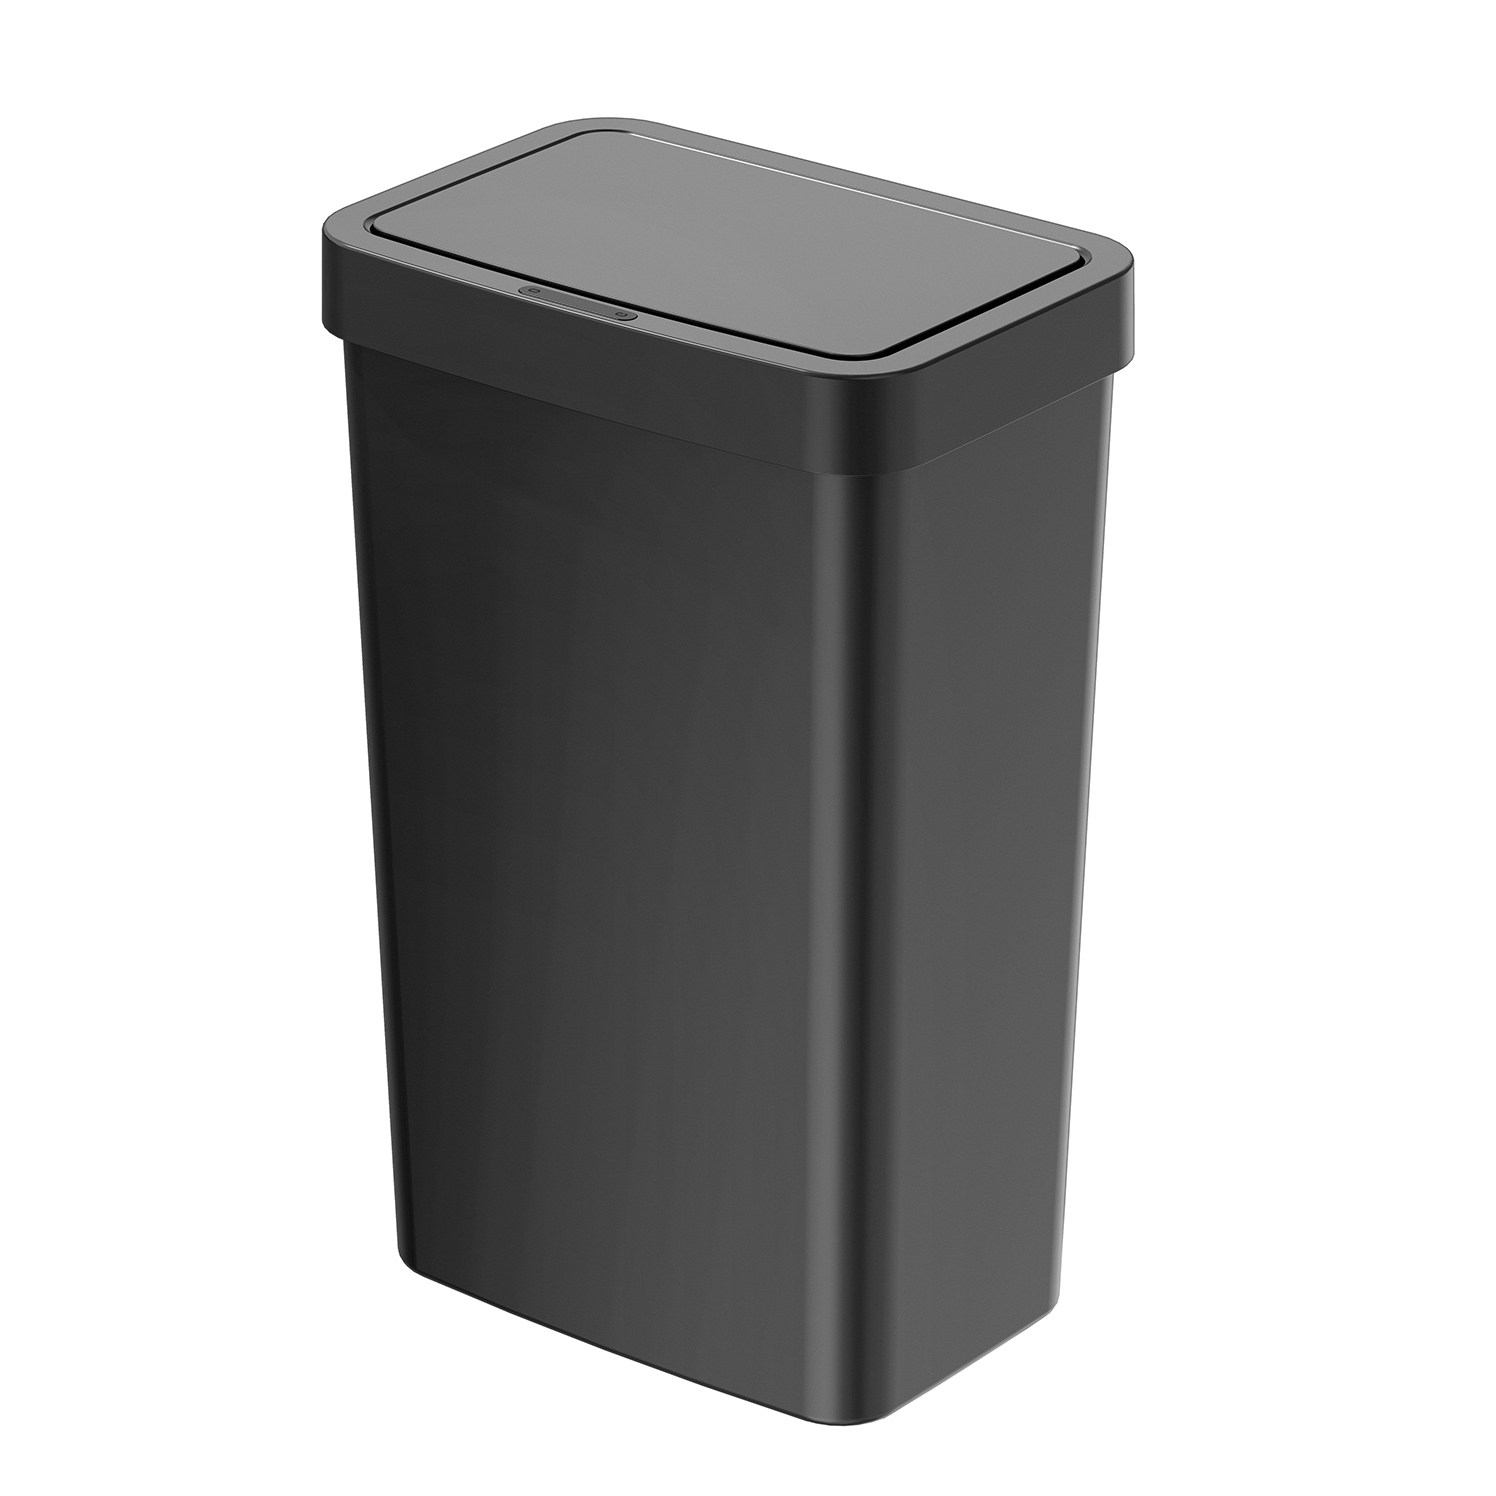 Mainstays 13.2 Gallon Trash Can, Plastic Motion Sensor Kitchen Trash Can, Black - image 1 of 12